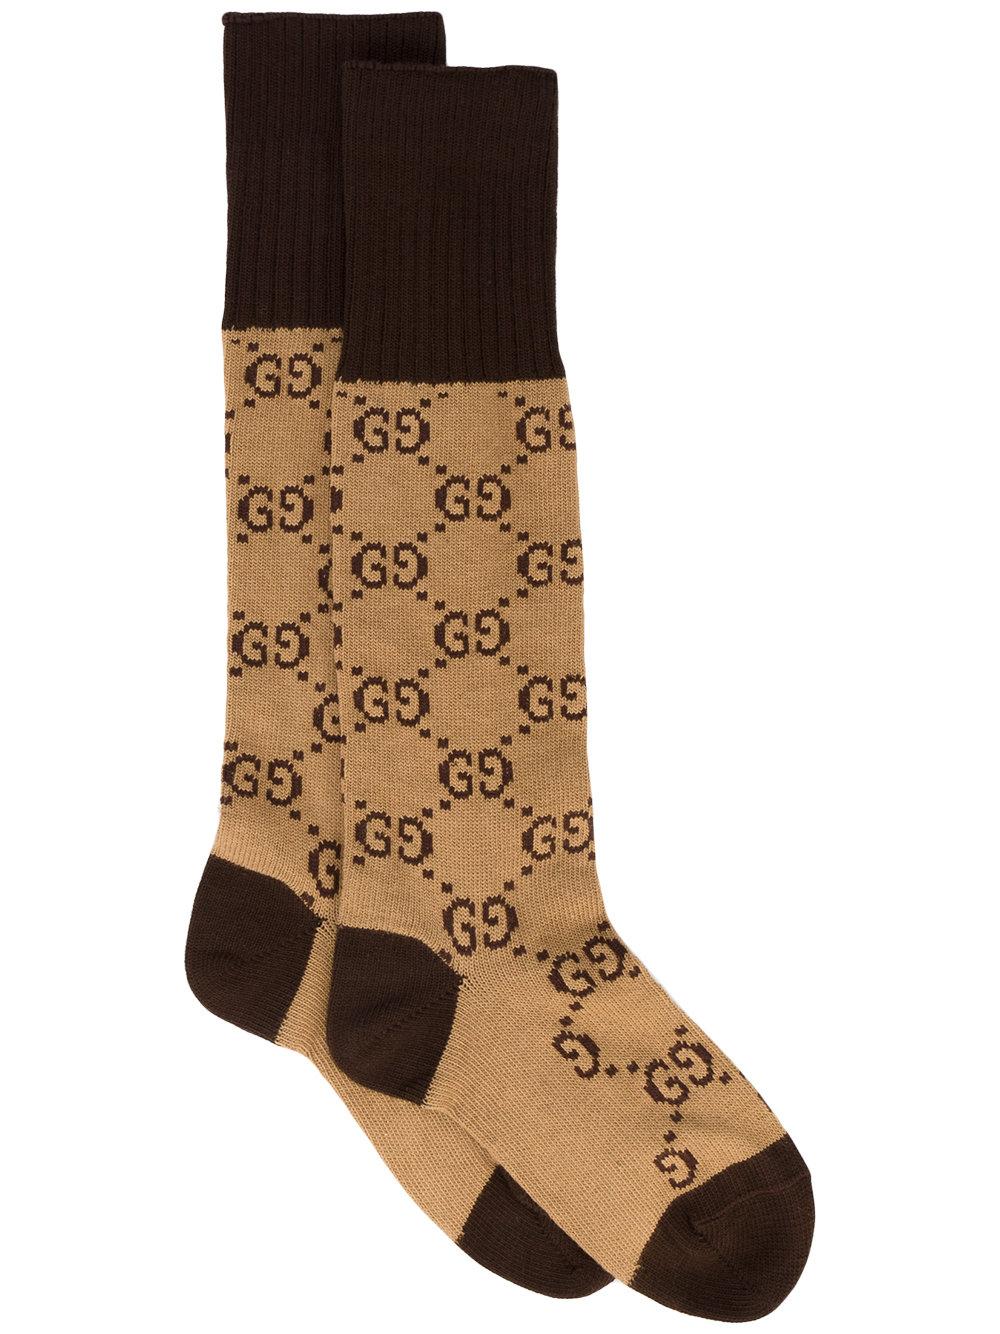 Lyst - Gucci Logo Intarsia Socks in Natural for Men